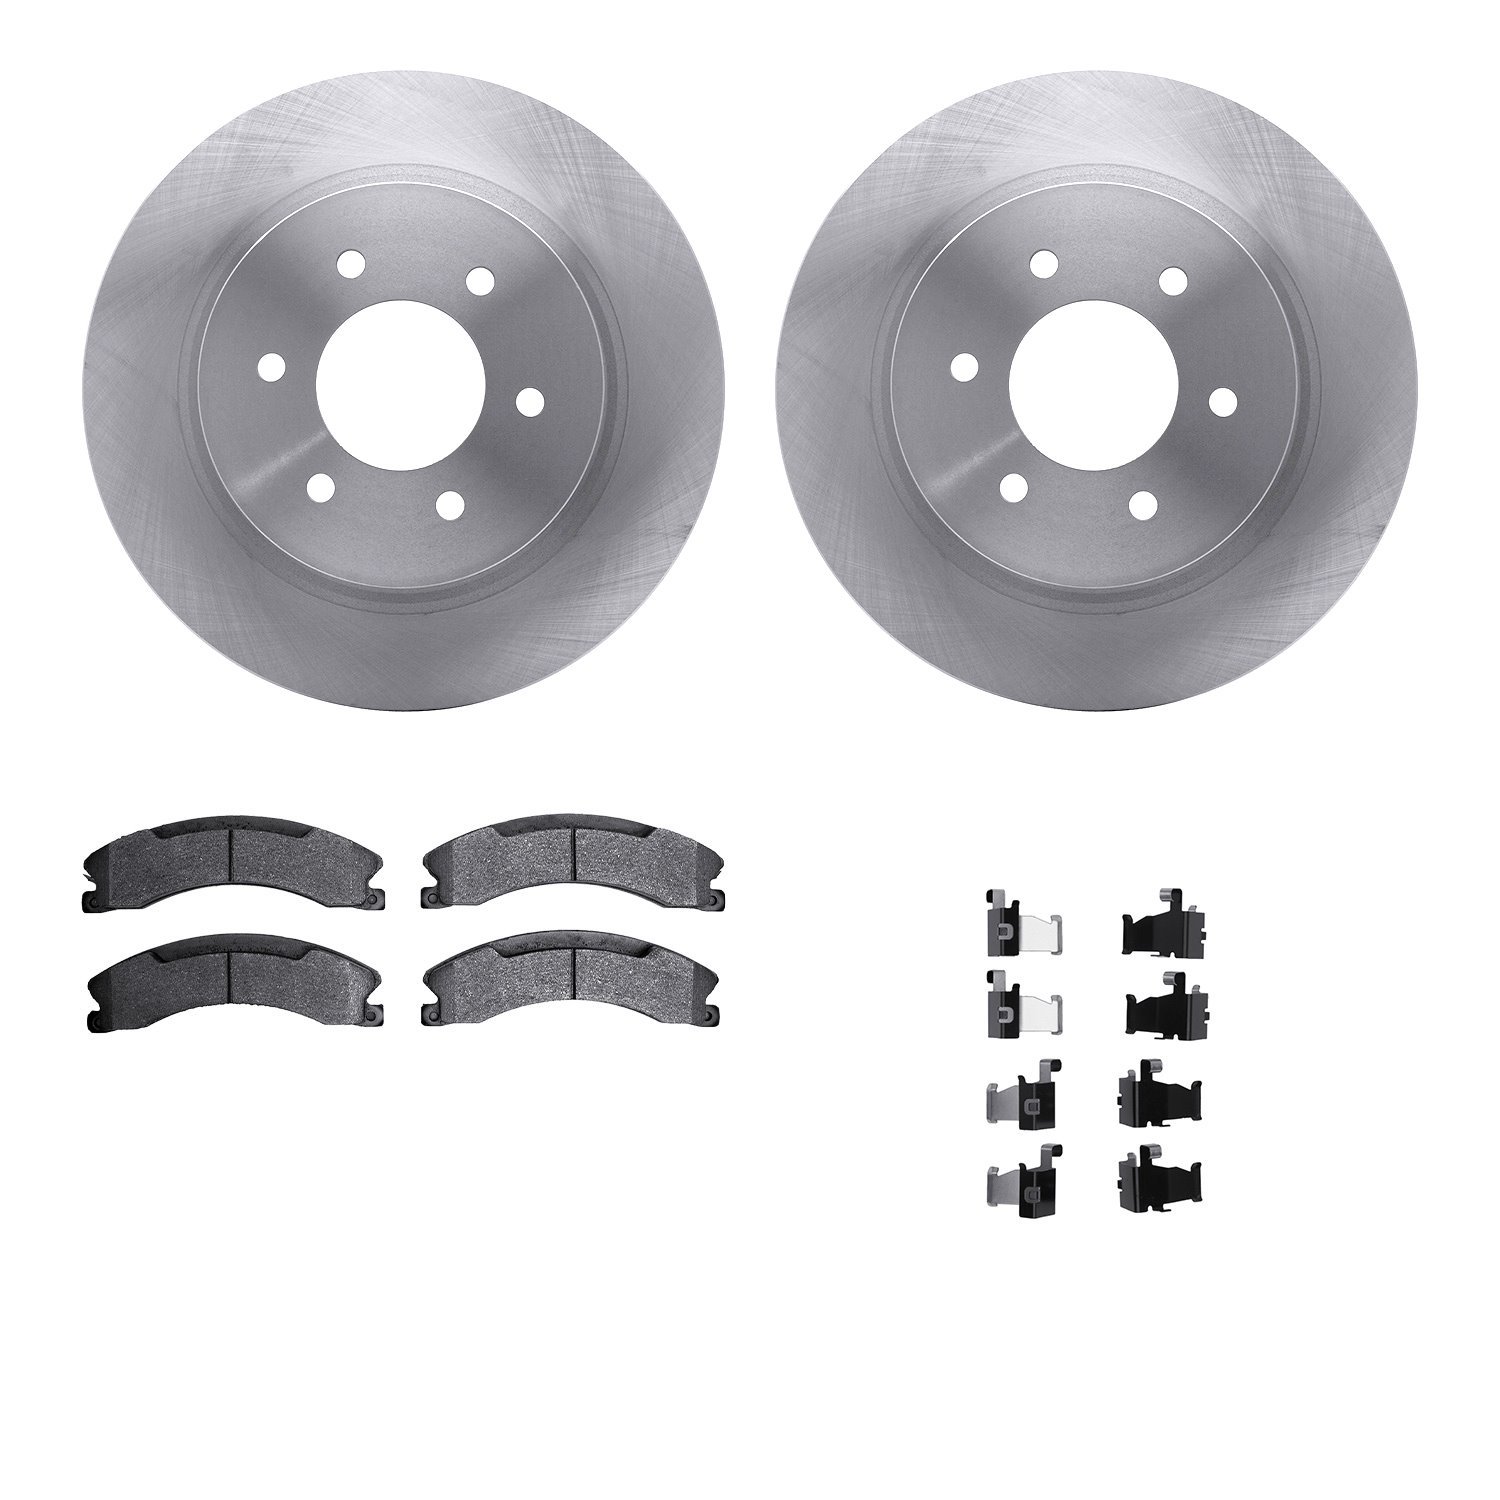 6212-67013 Brake Rotors w/Heavy-Duty Brake Pads Kit & Hardware, Fits Select Infiniti/Nissan, Position: Front